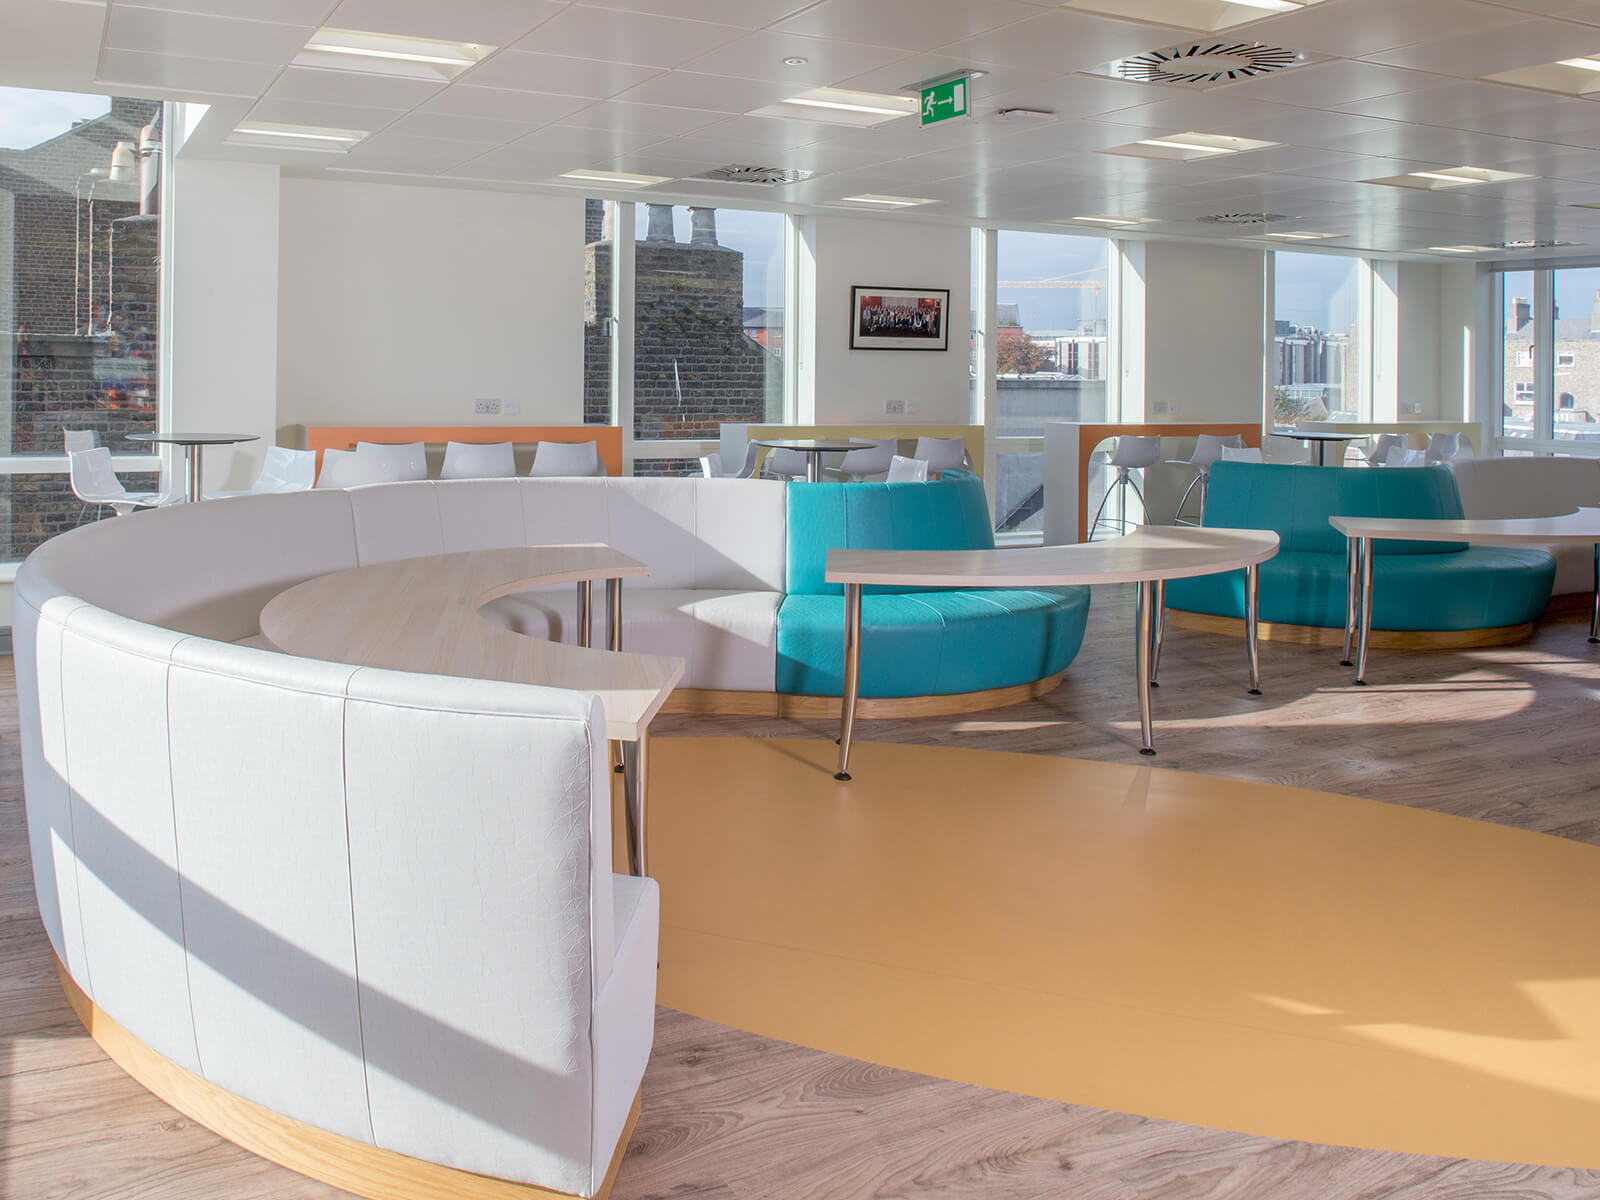 SLMD Office Interior Design Portfolio - World Rugby Company Cafe